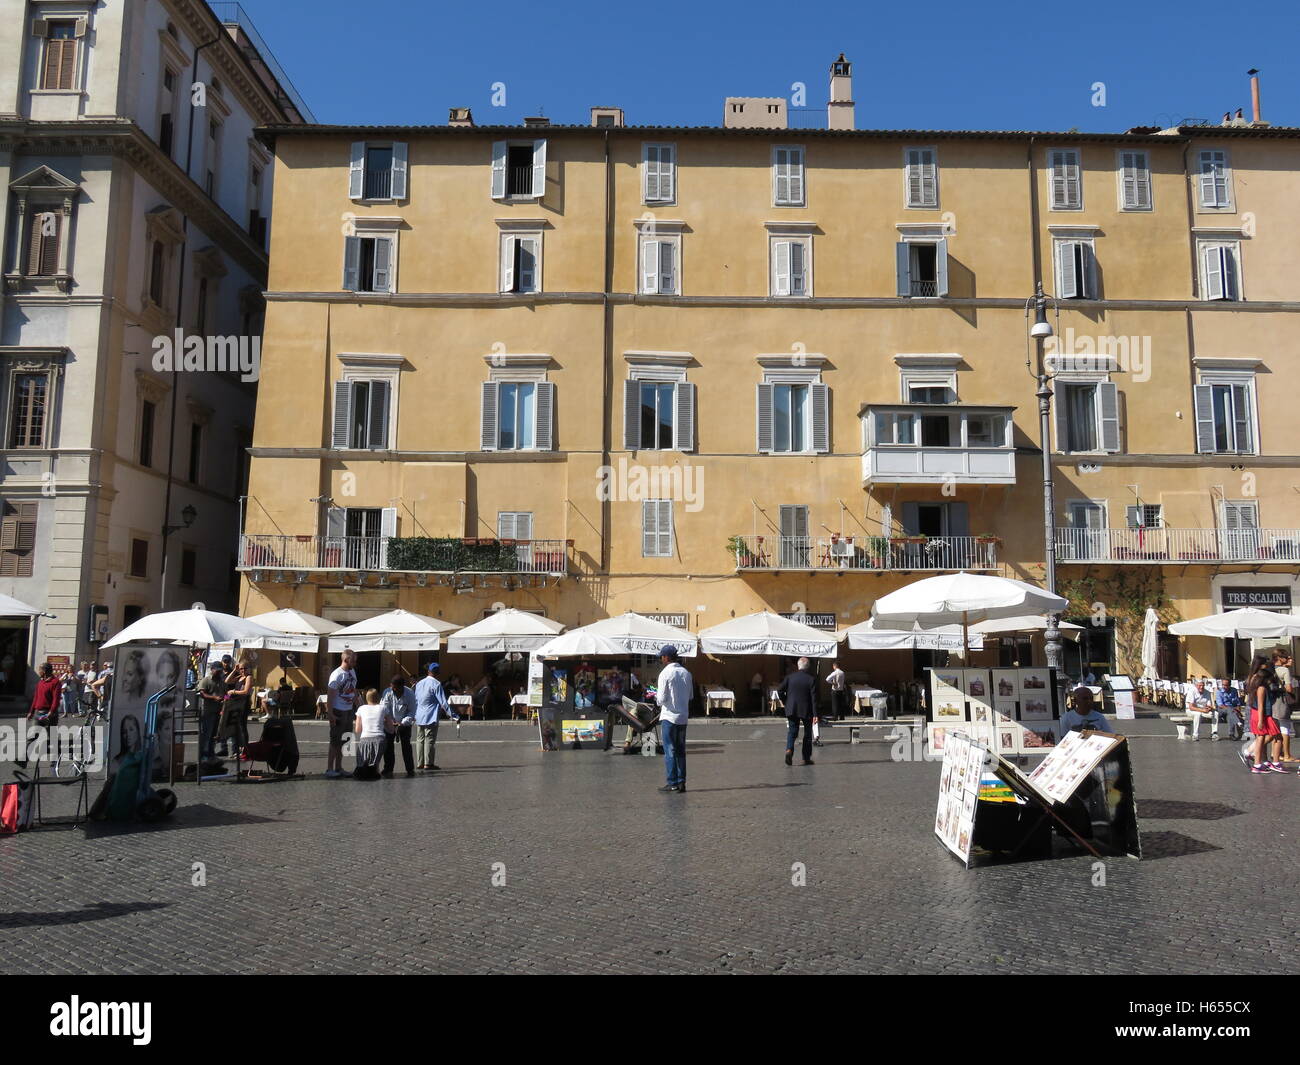 Piazza Navona with tourists Stock Photo